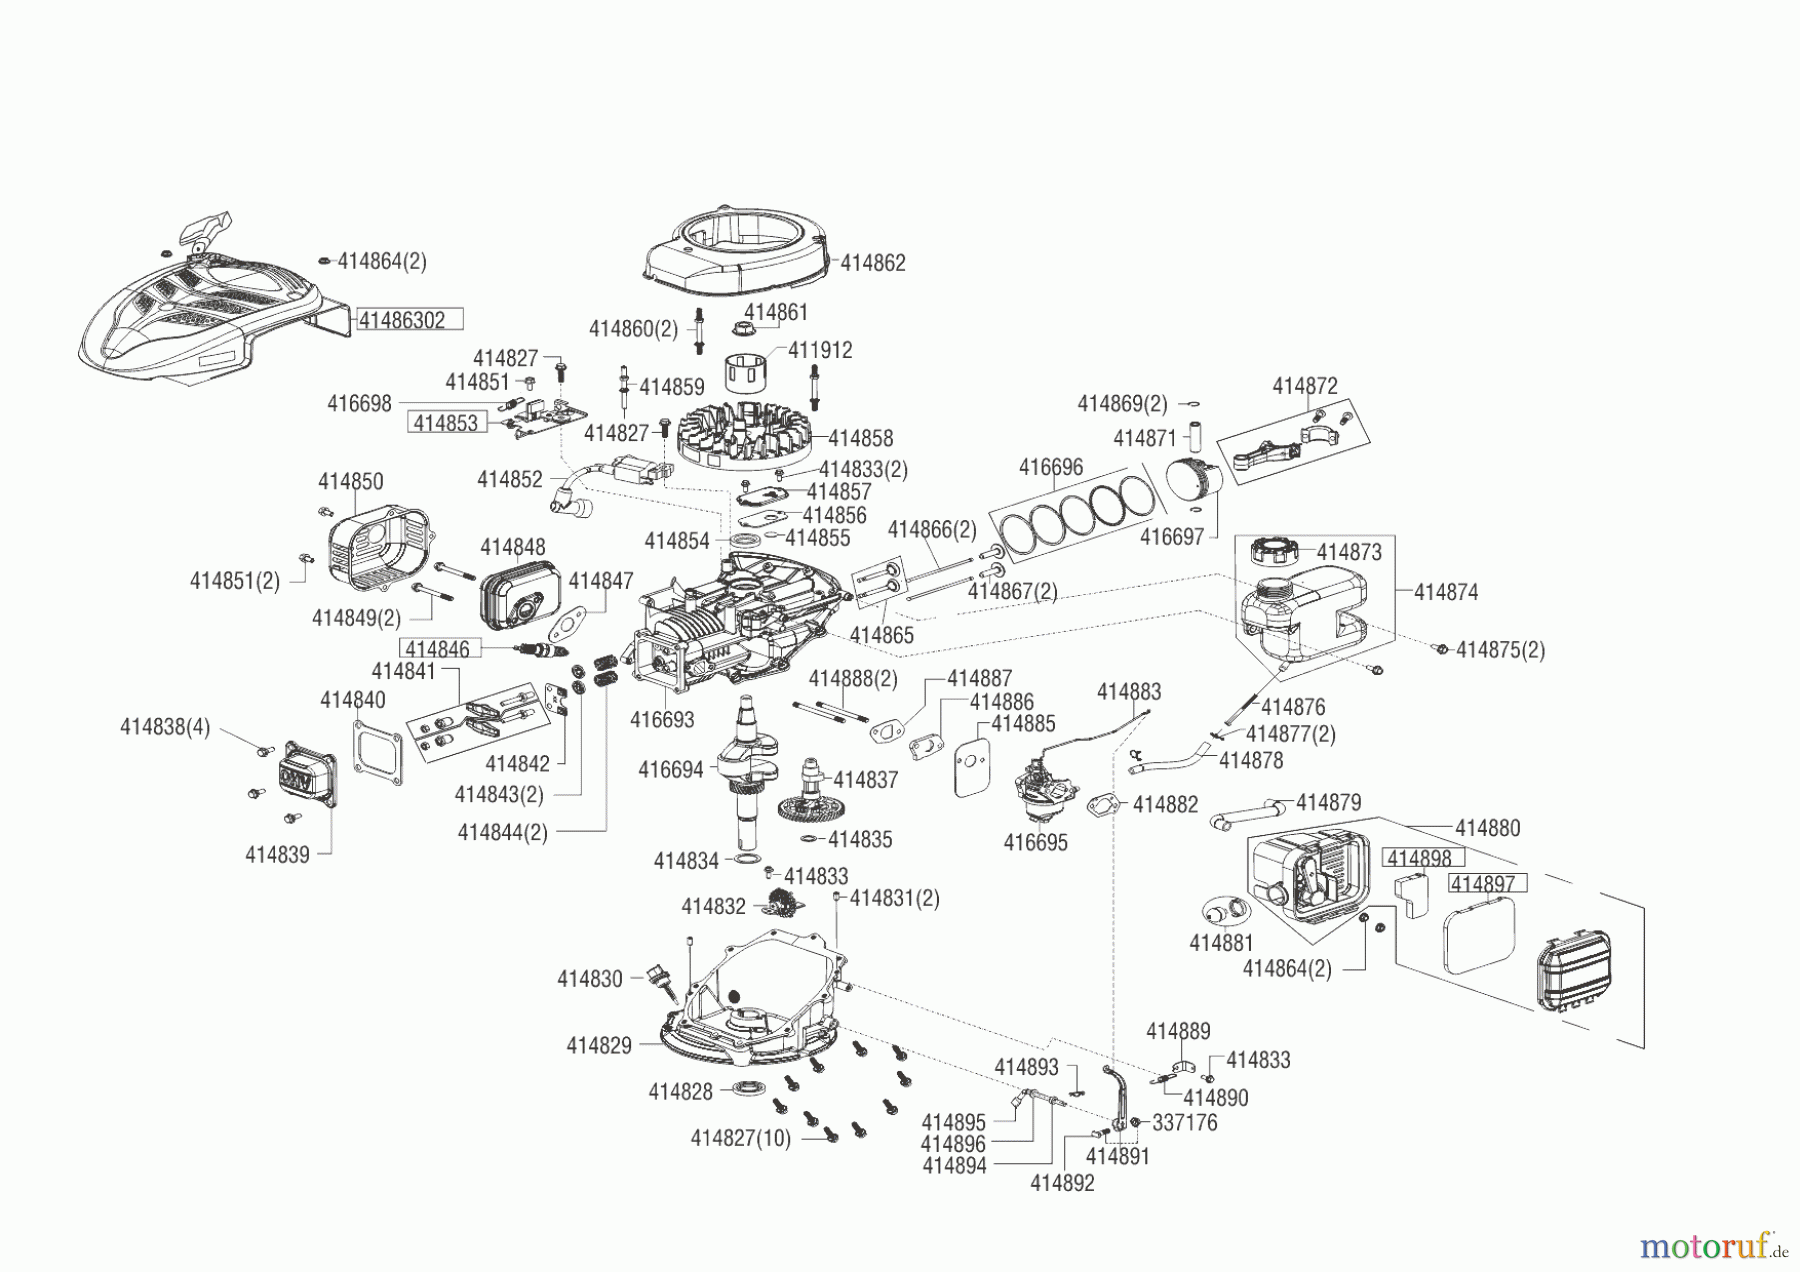  AL-KO Gartentechnik Benzinmotoren B-MOTOR PRO 140 QSS LC1P65FE R3  08/2015 Seite 1